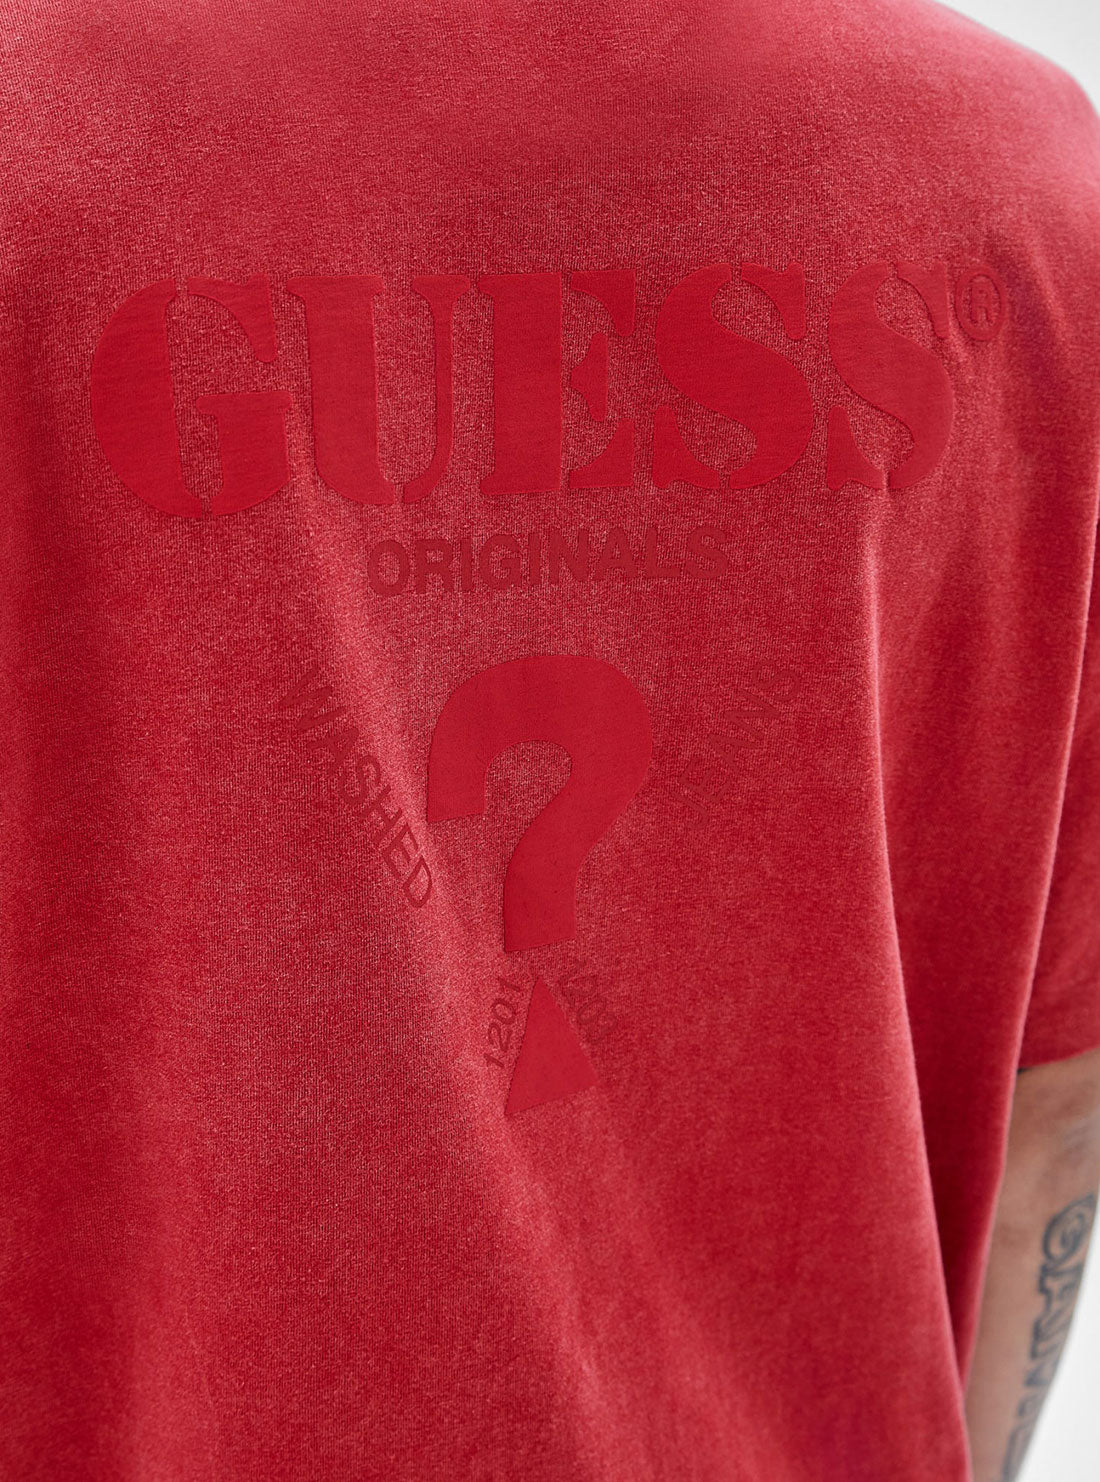 GUESS Men's Guess Originals Red Camp Logo T-Shirt M2RI35K9XF3 Detail View